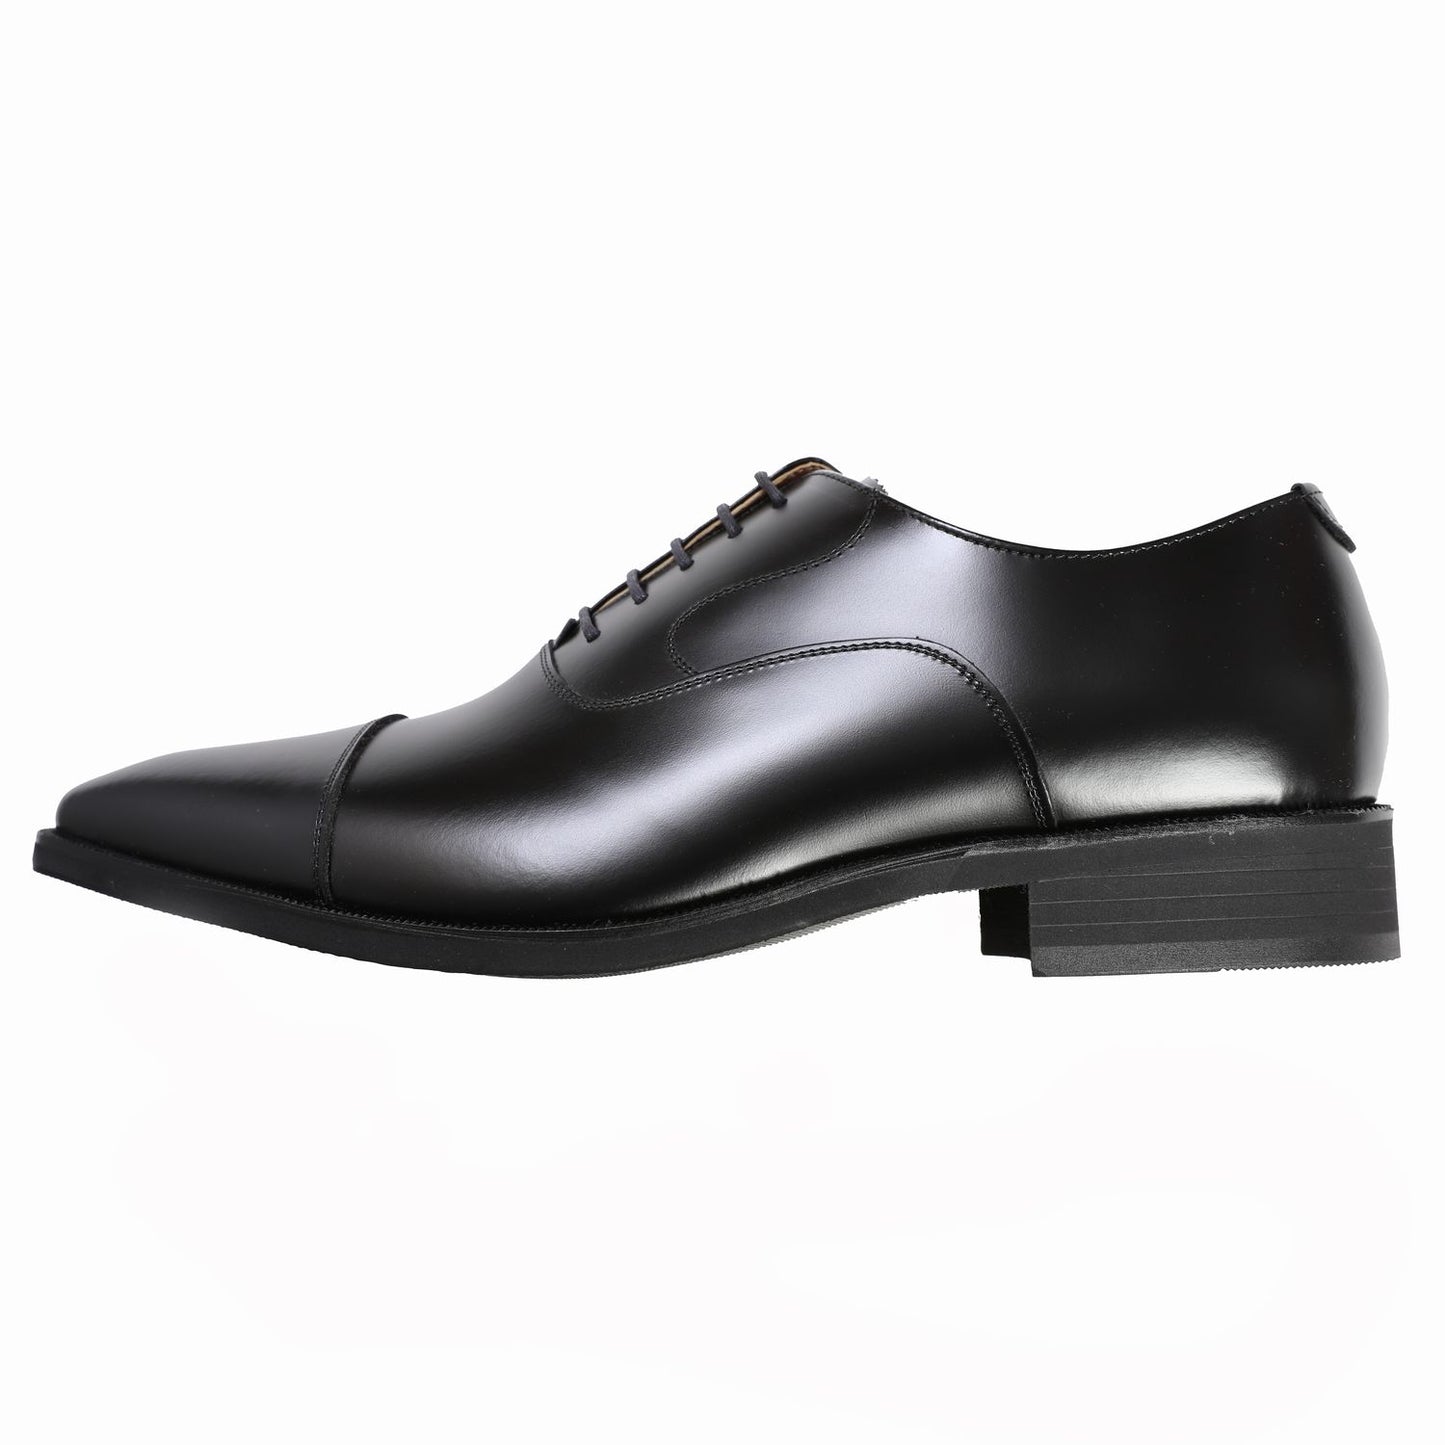 Men's Genuine Leather Oxford Formal Classic Dress Shoes Cap Toe Lace Up No. k1010